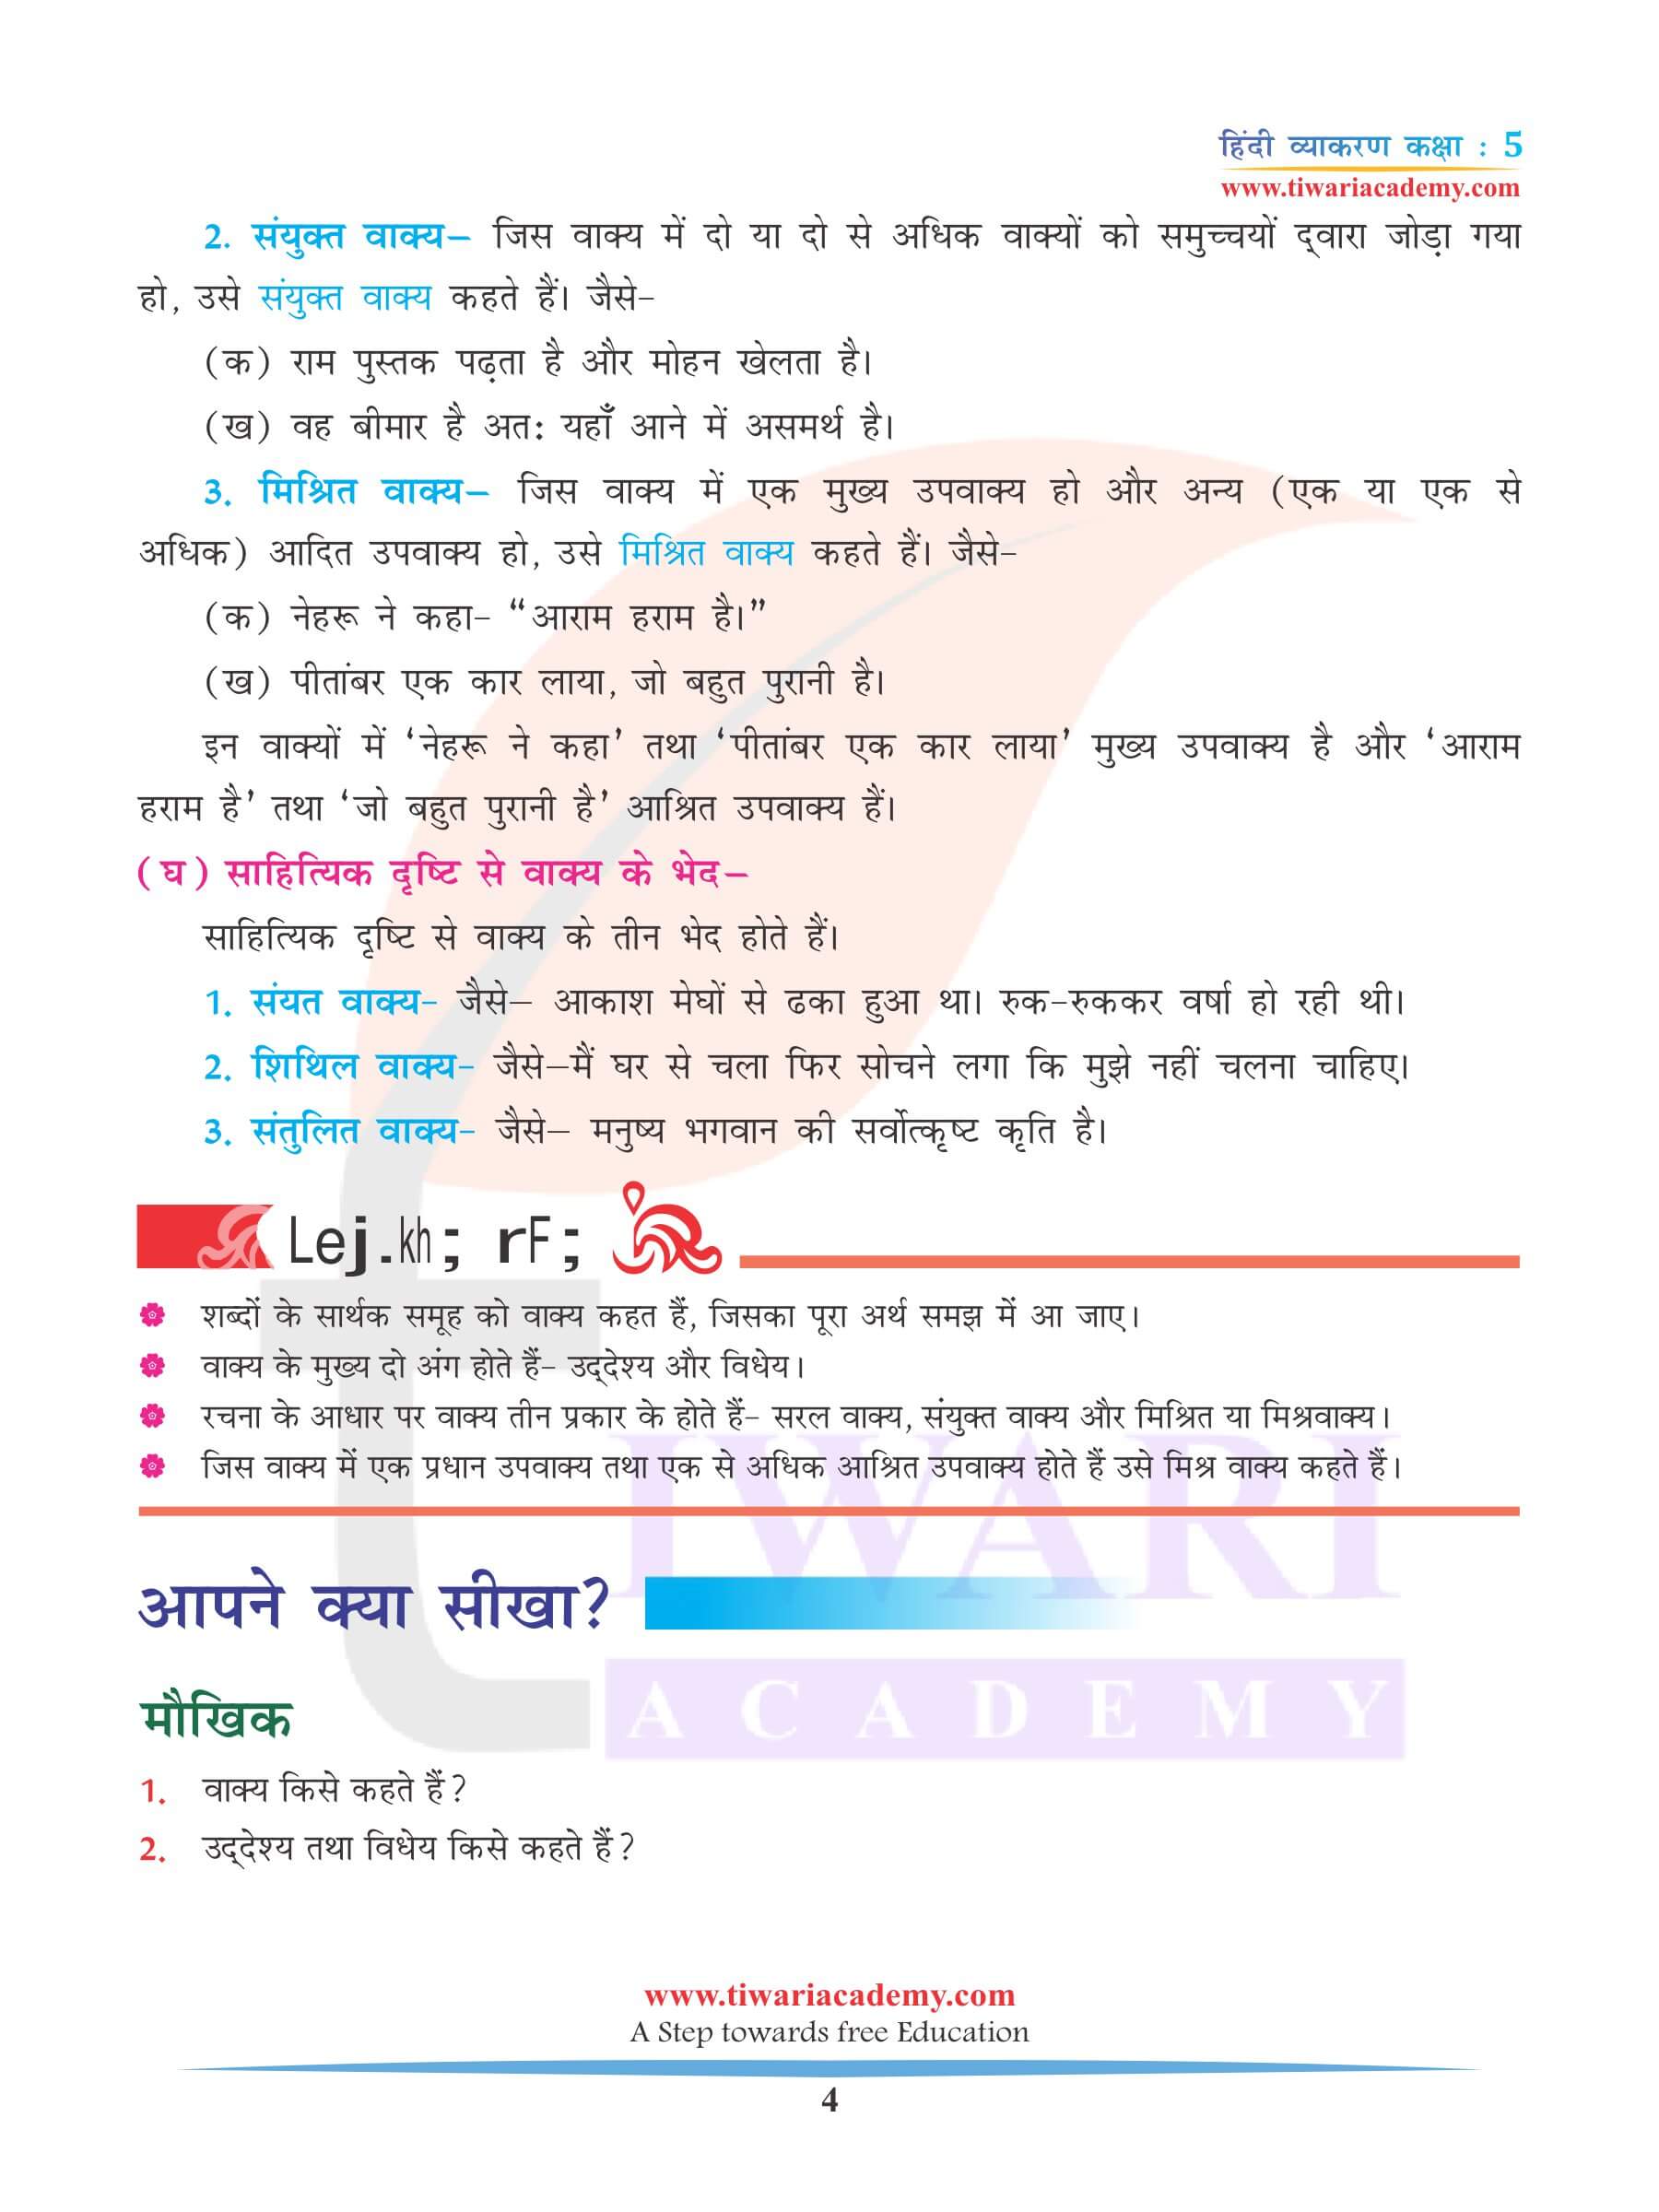 कक्षा 5 हिंदी व्याकरण पाठ वाक्य